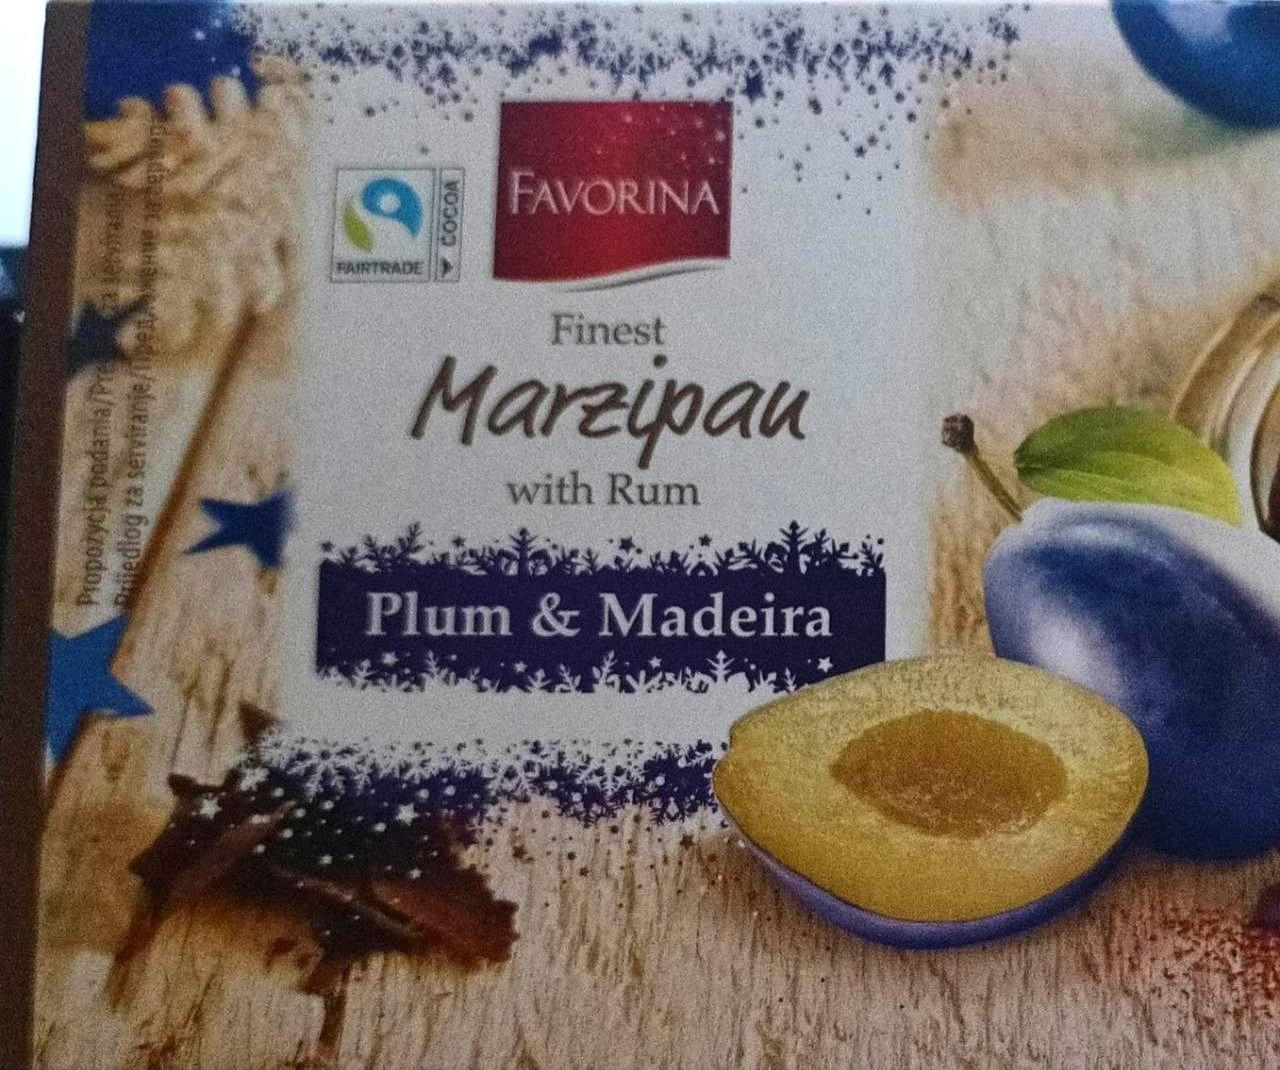 Fotografie - Finest Marzipan with Rum Plum & Madeira Favorina